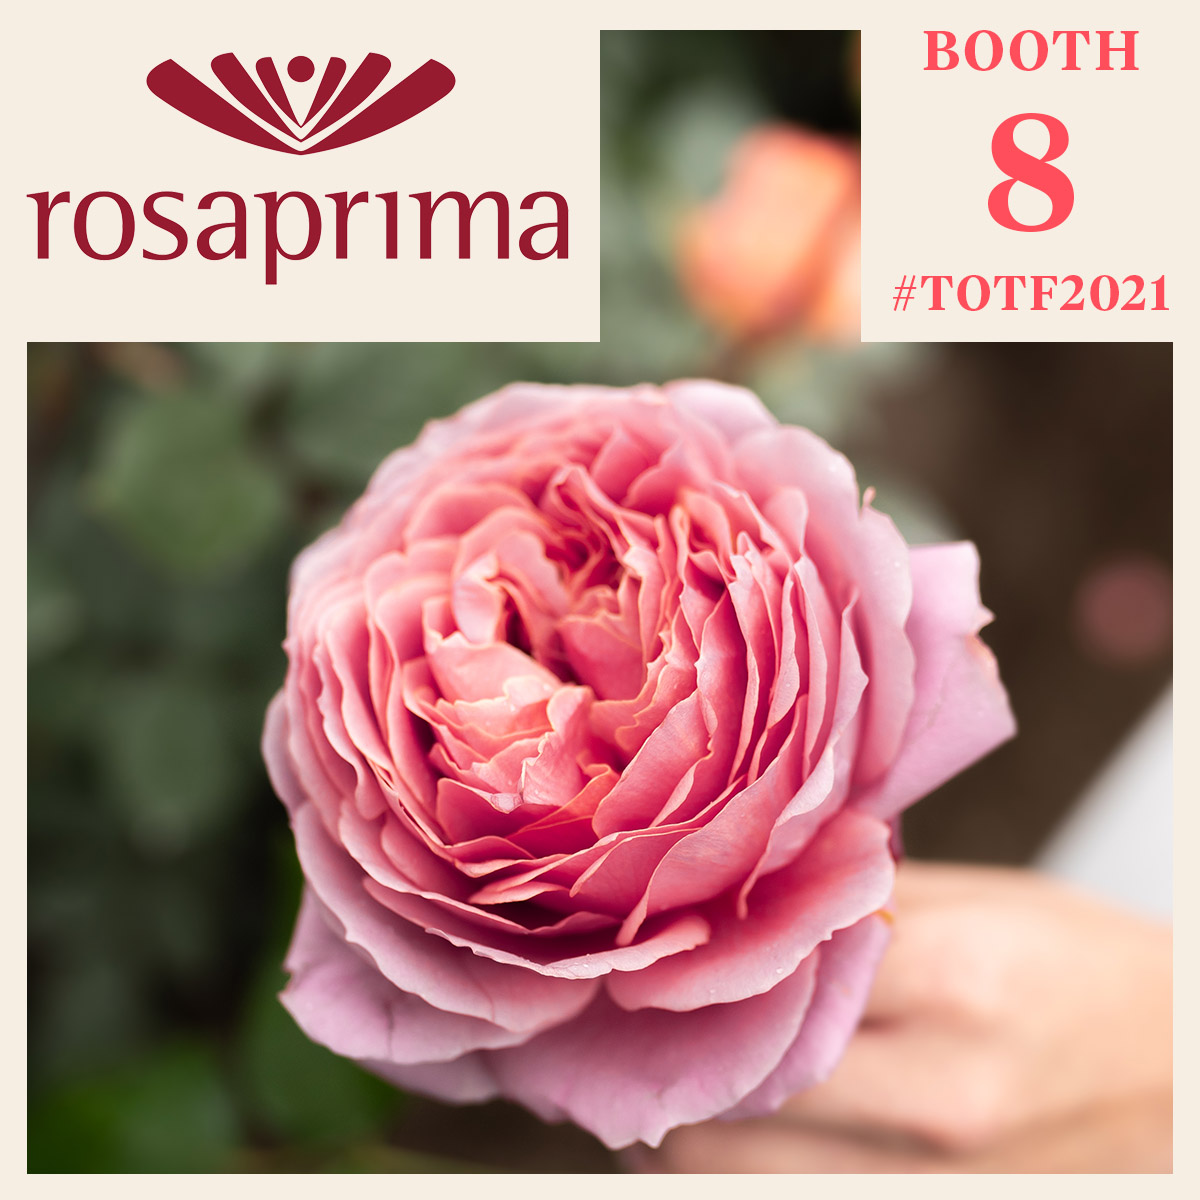 the-legendary-rosaprima-rose-featured